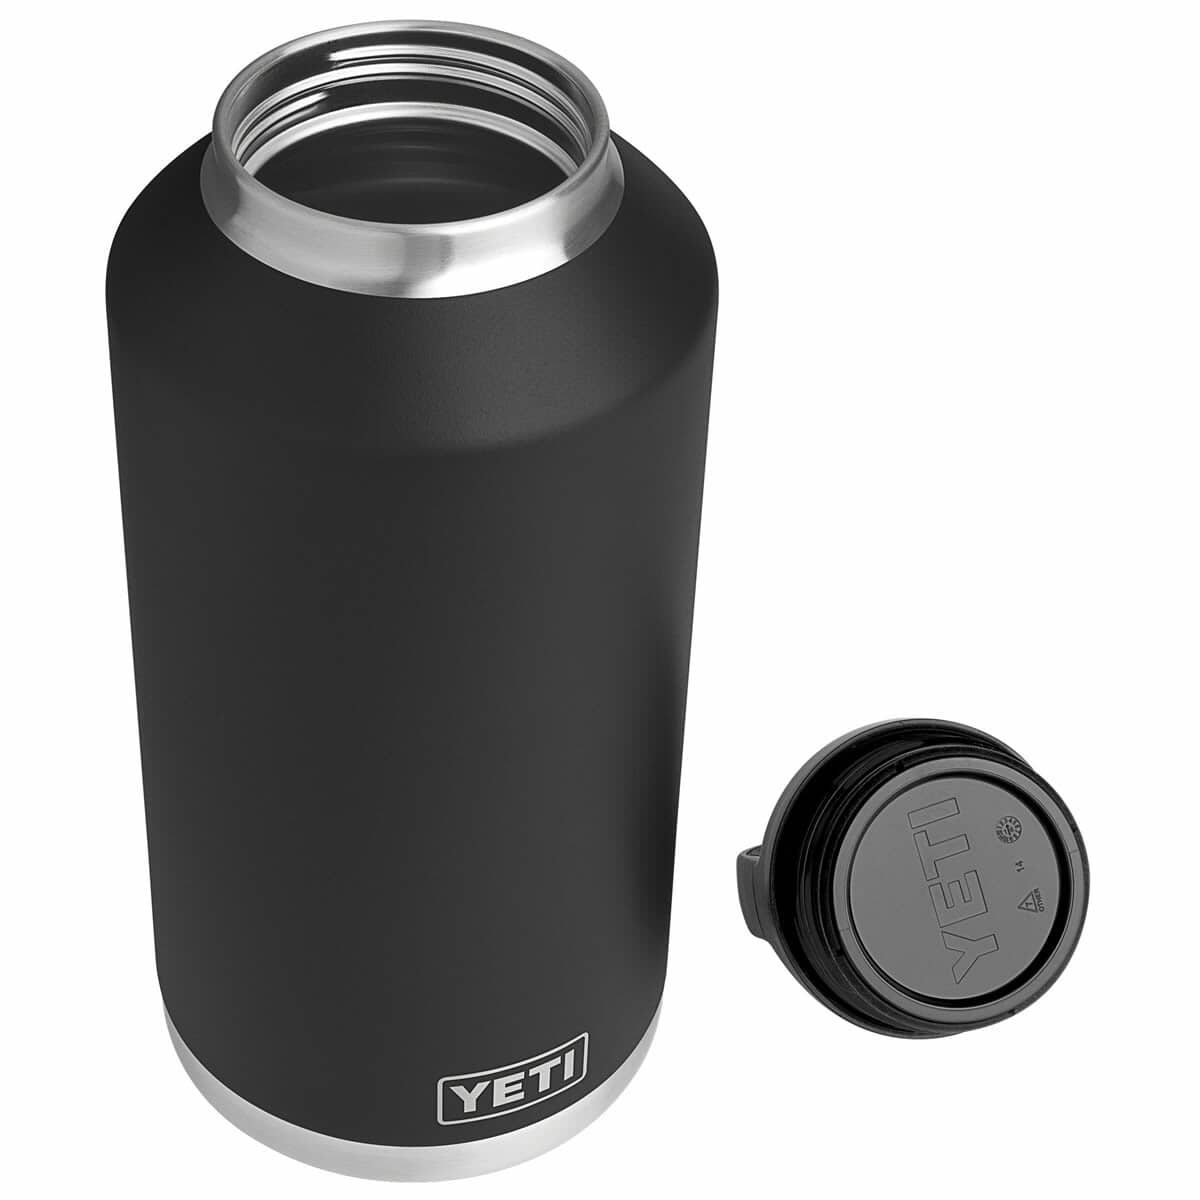 Buy Product : YETI Rambler 64 Oz (1.9L) Bottle with Chug Cap in Black